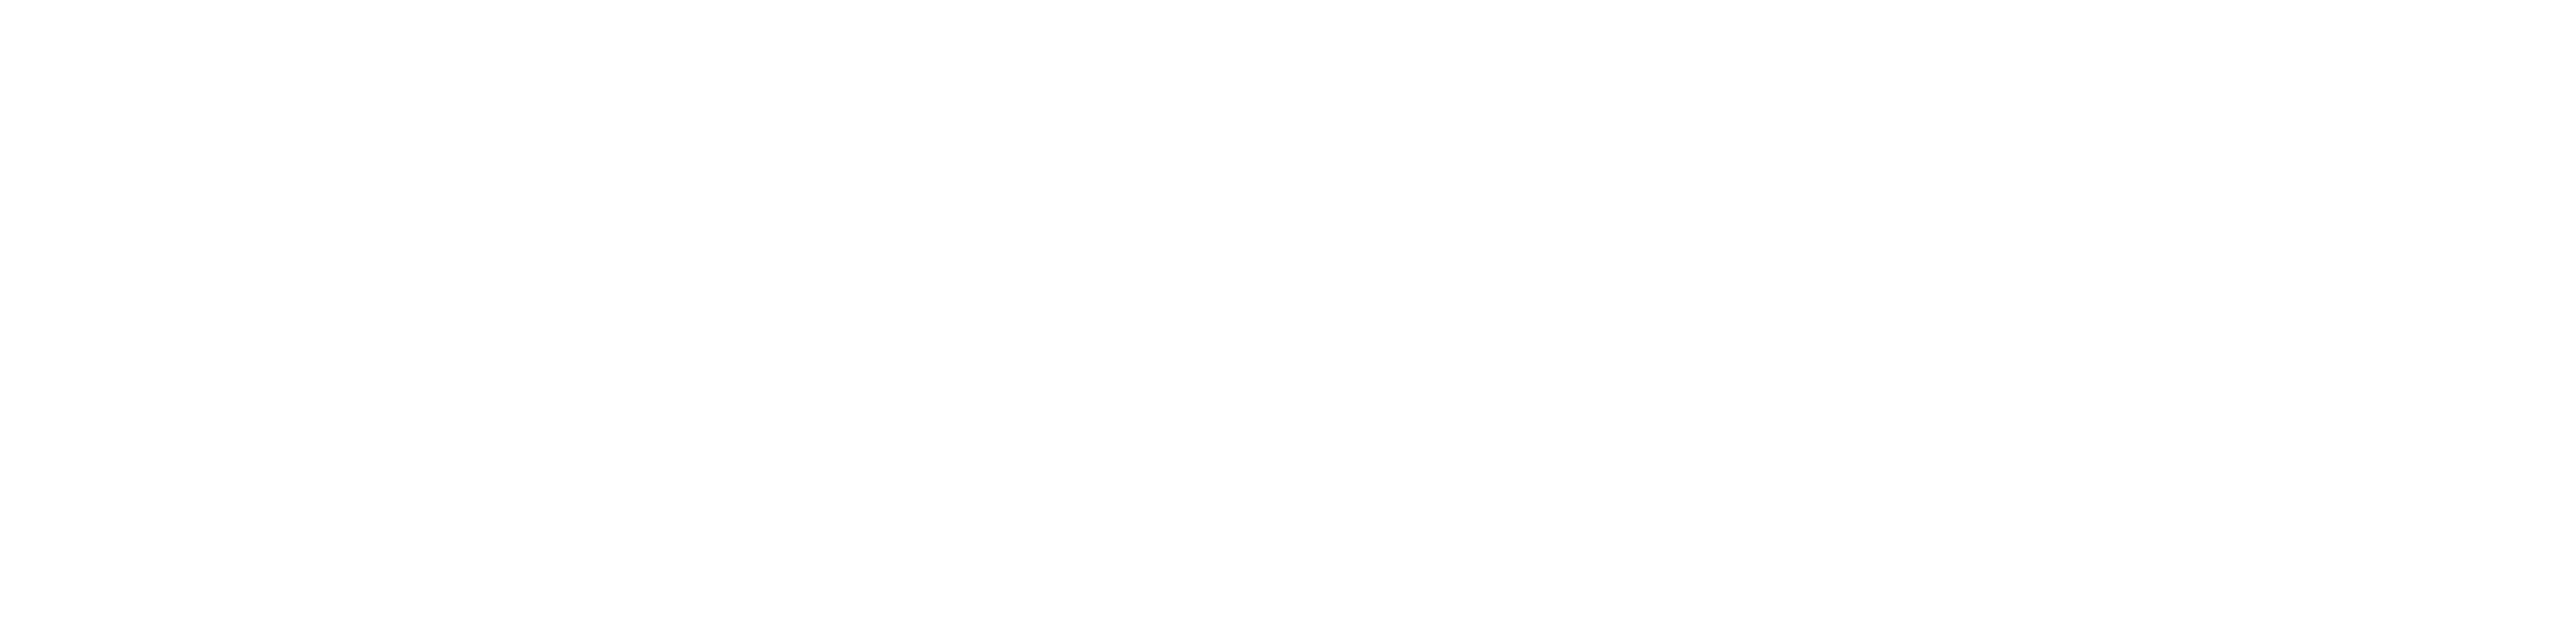 Rider Guide Logo